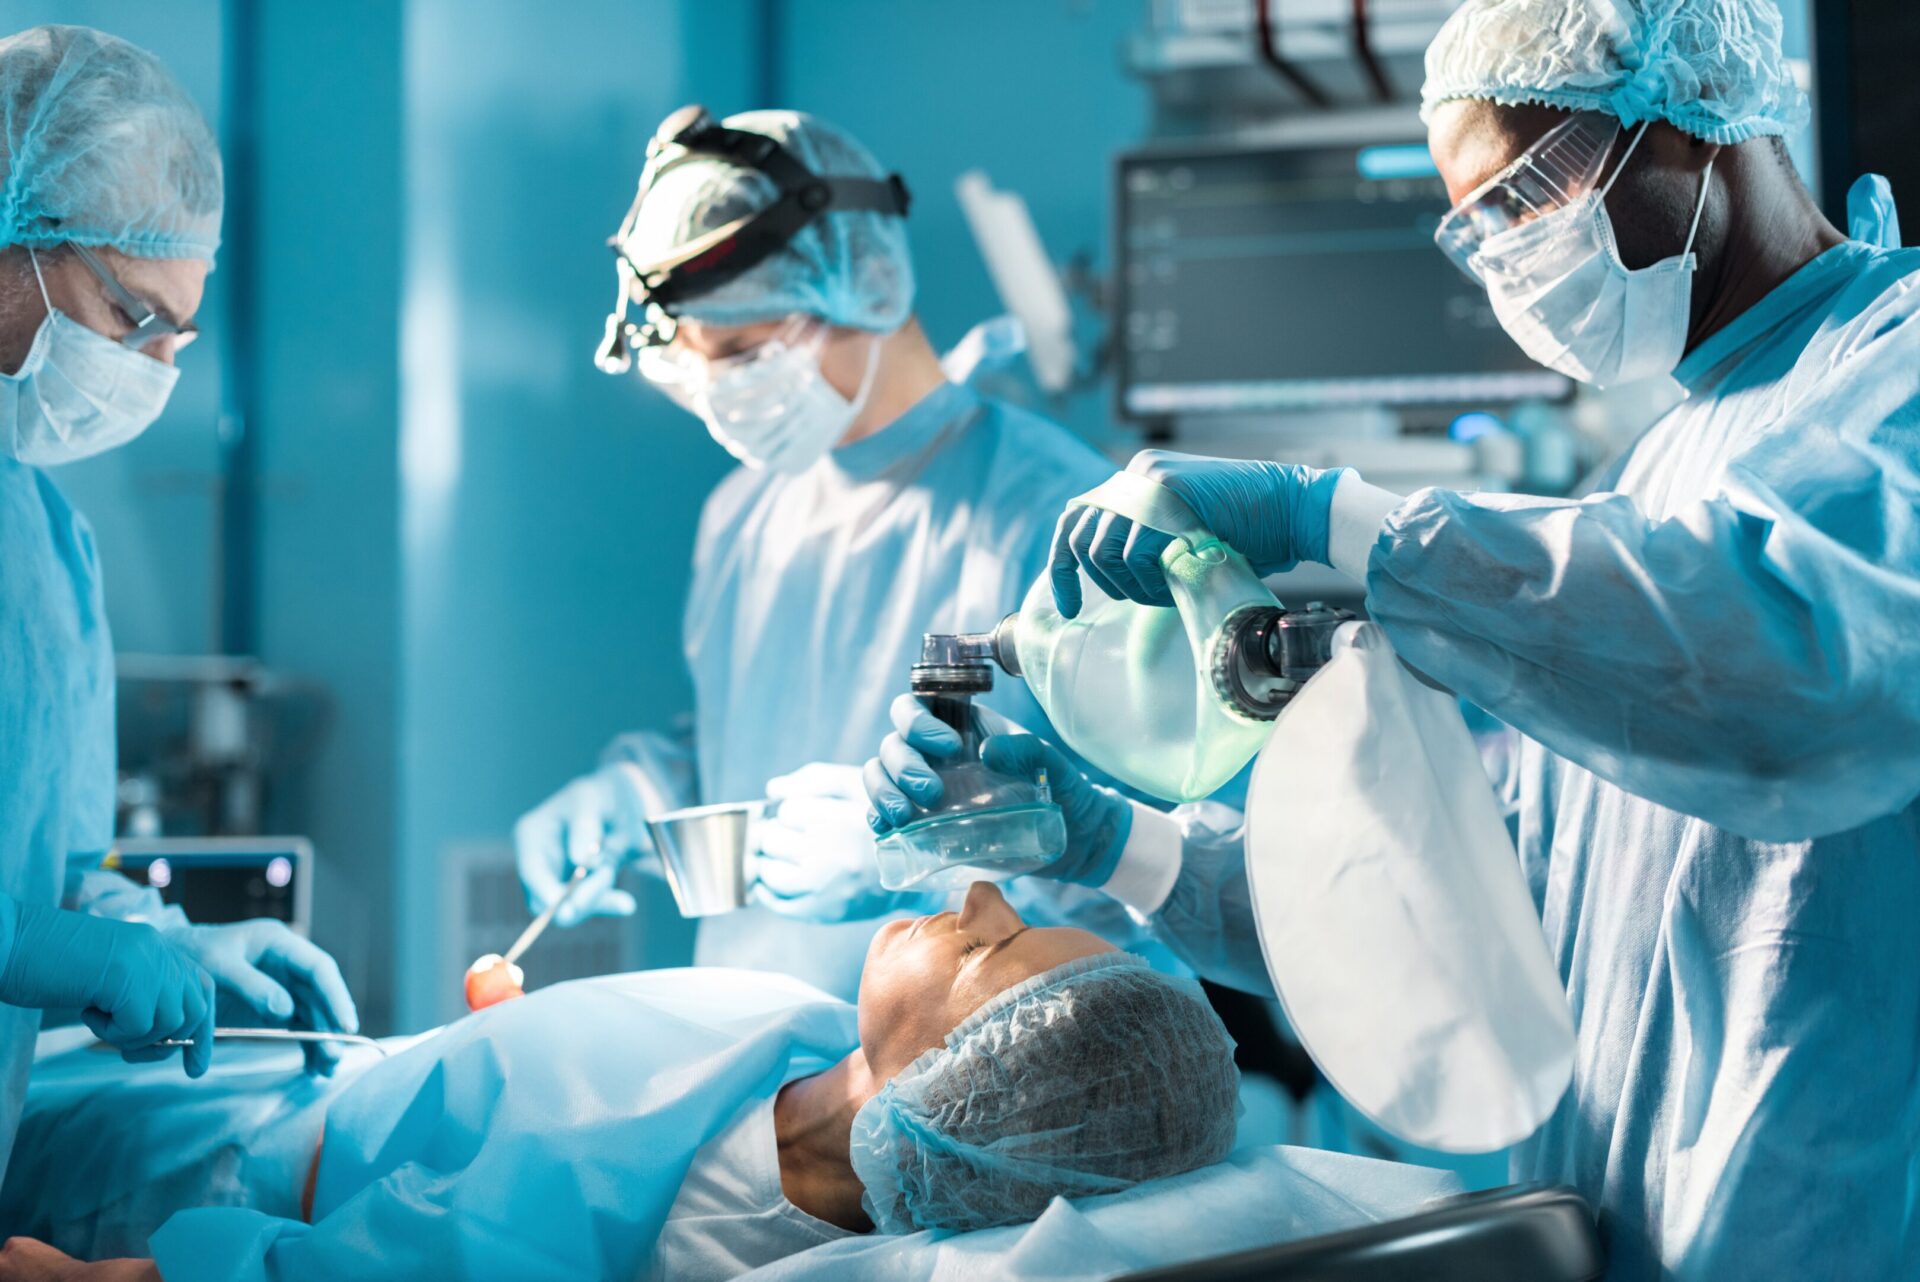 new york anesthesia errors, anesthesia error law firms